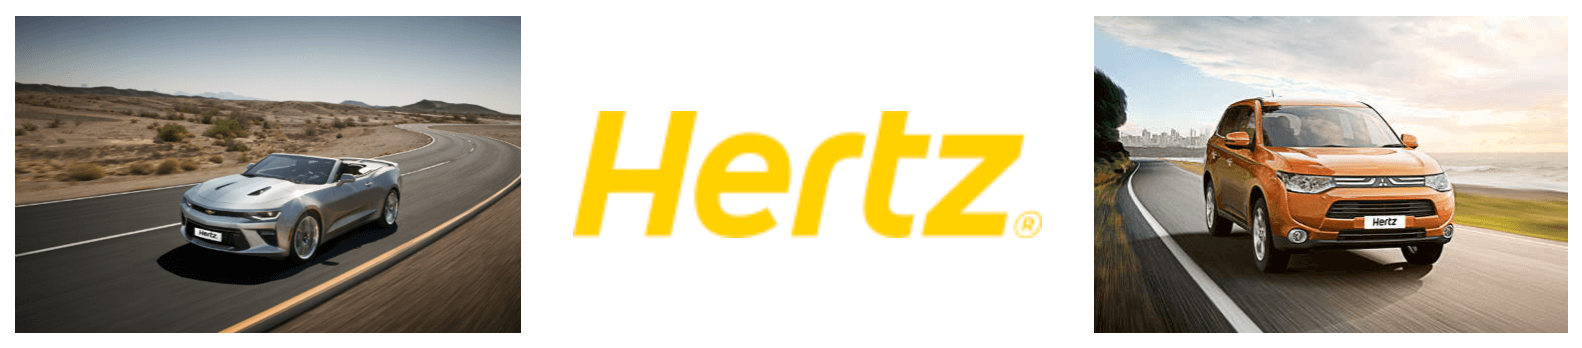 Hertz Europe Celebrates A Century With #HertzSuperStart